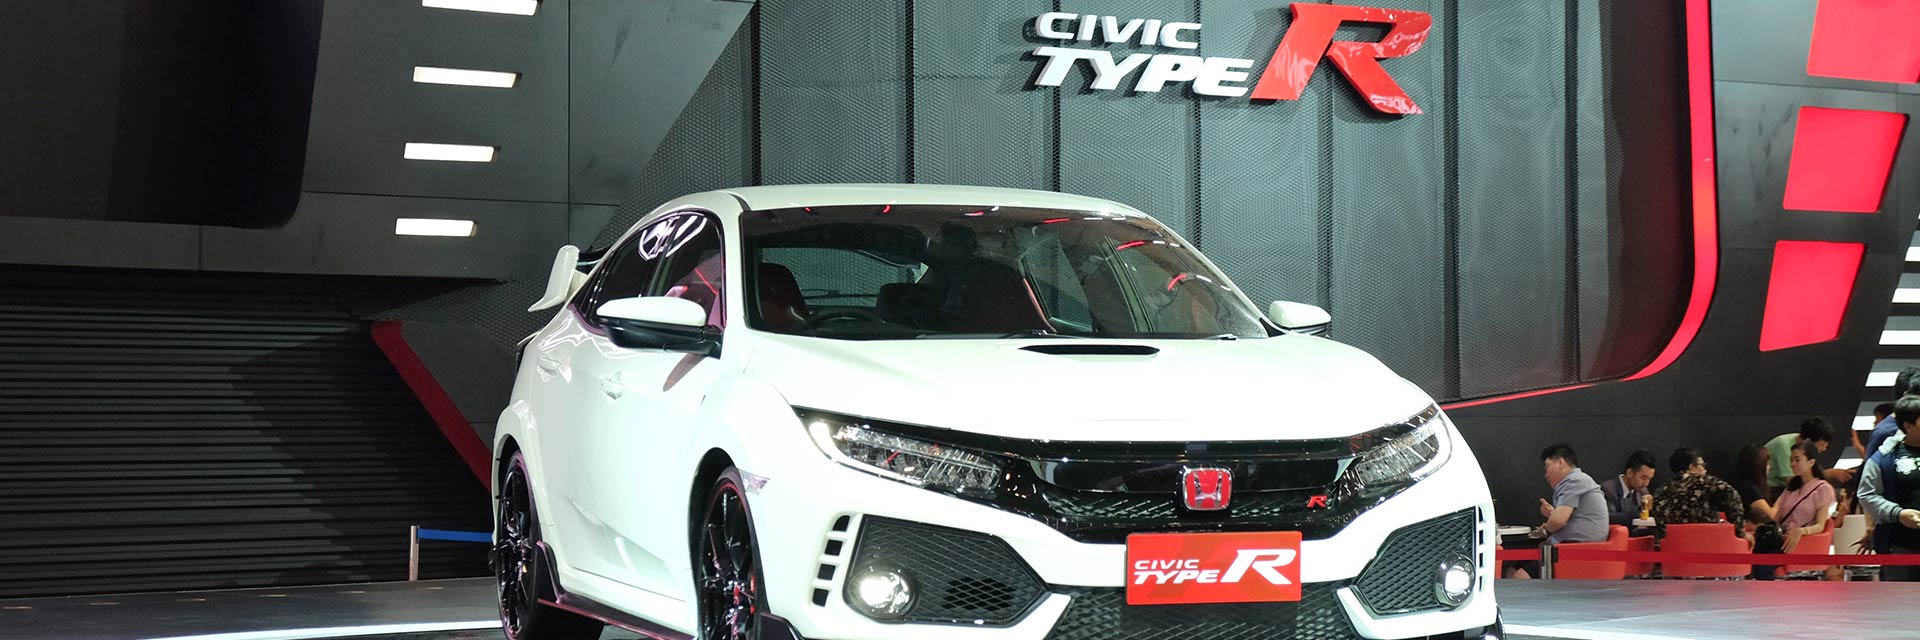 Civic Type R 2017